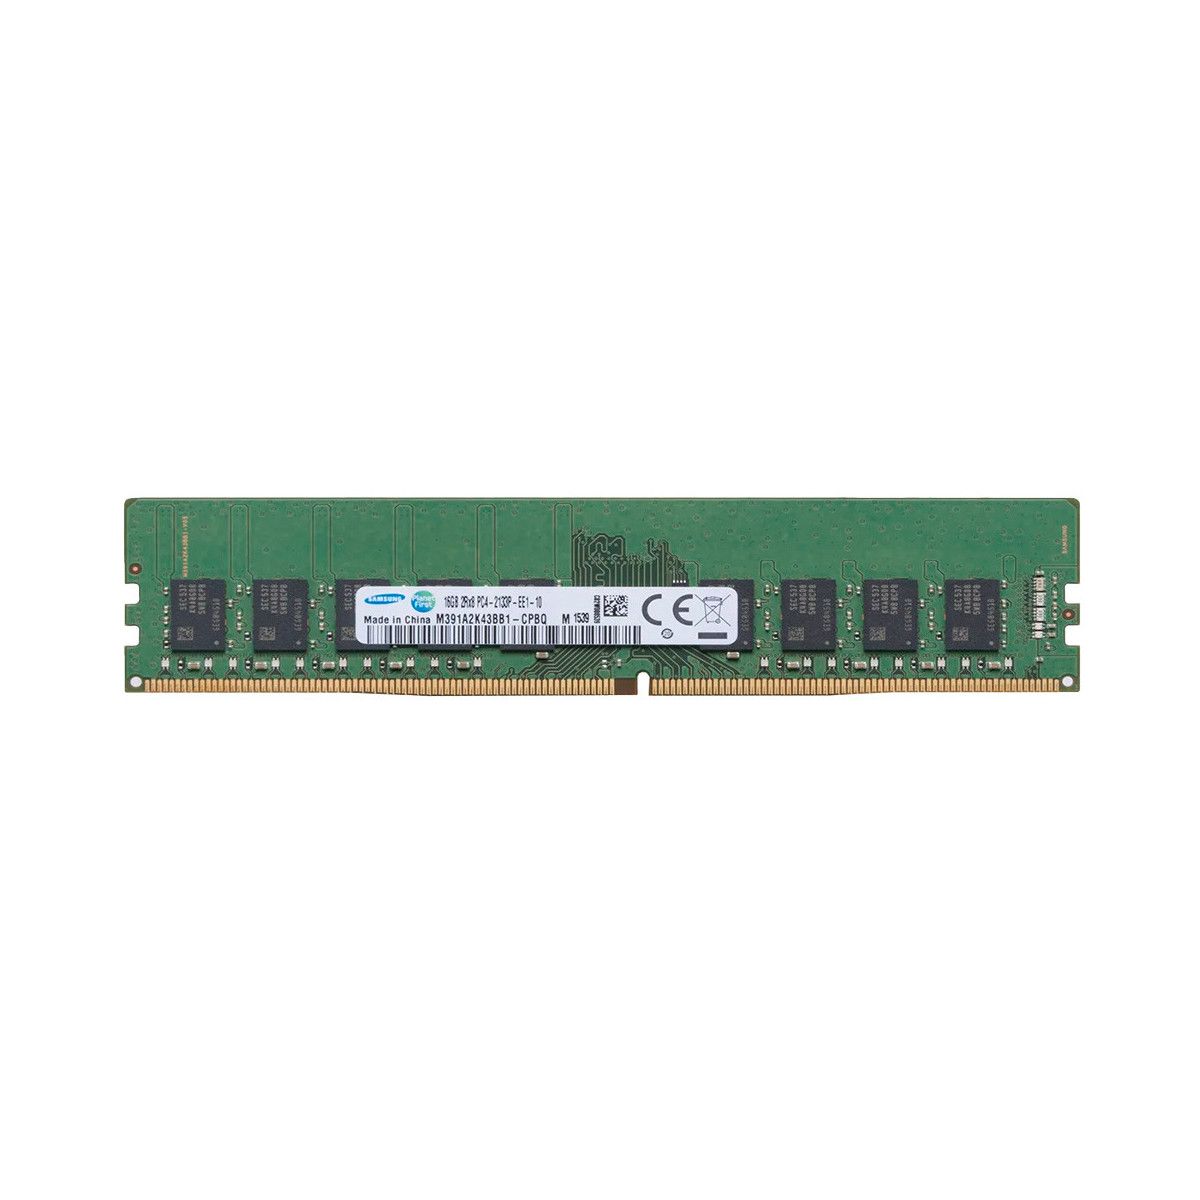 4X70K14185-MS - Memstar 1x 16GB DDR4-2133 ECC UDIMM PC4-17000P-E